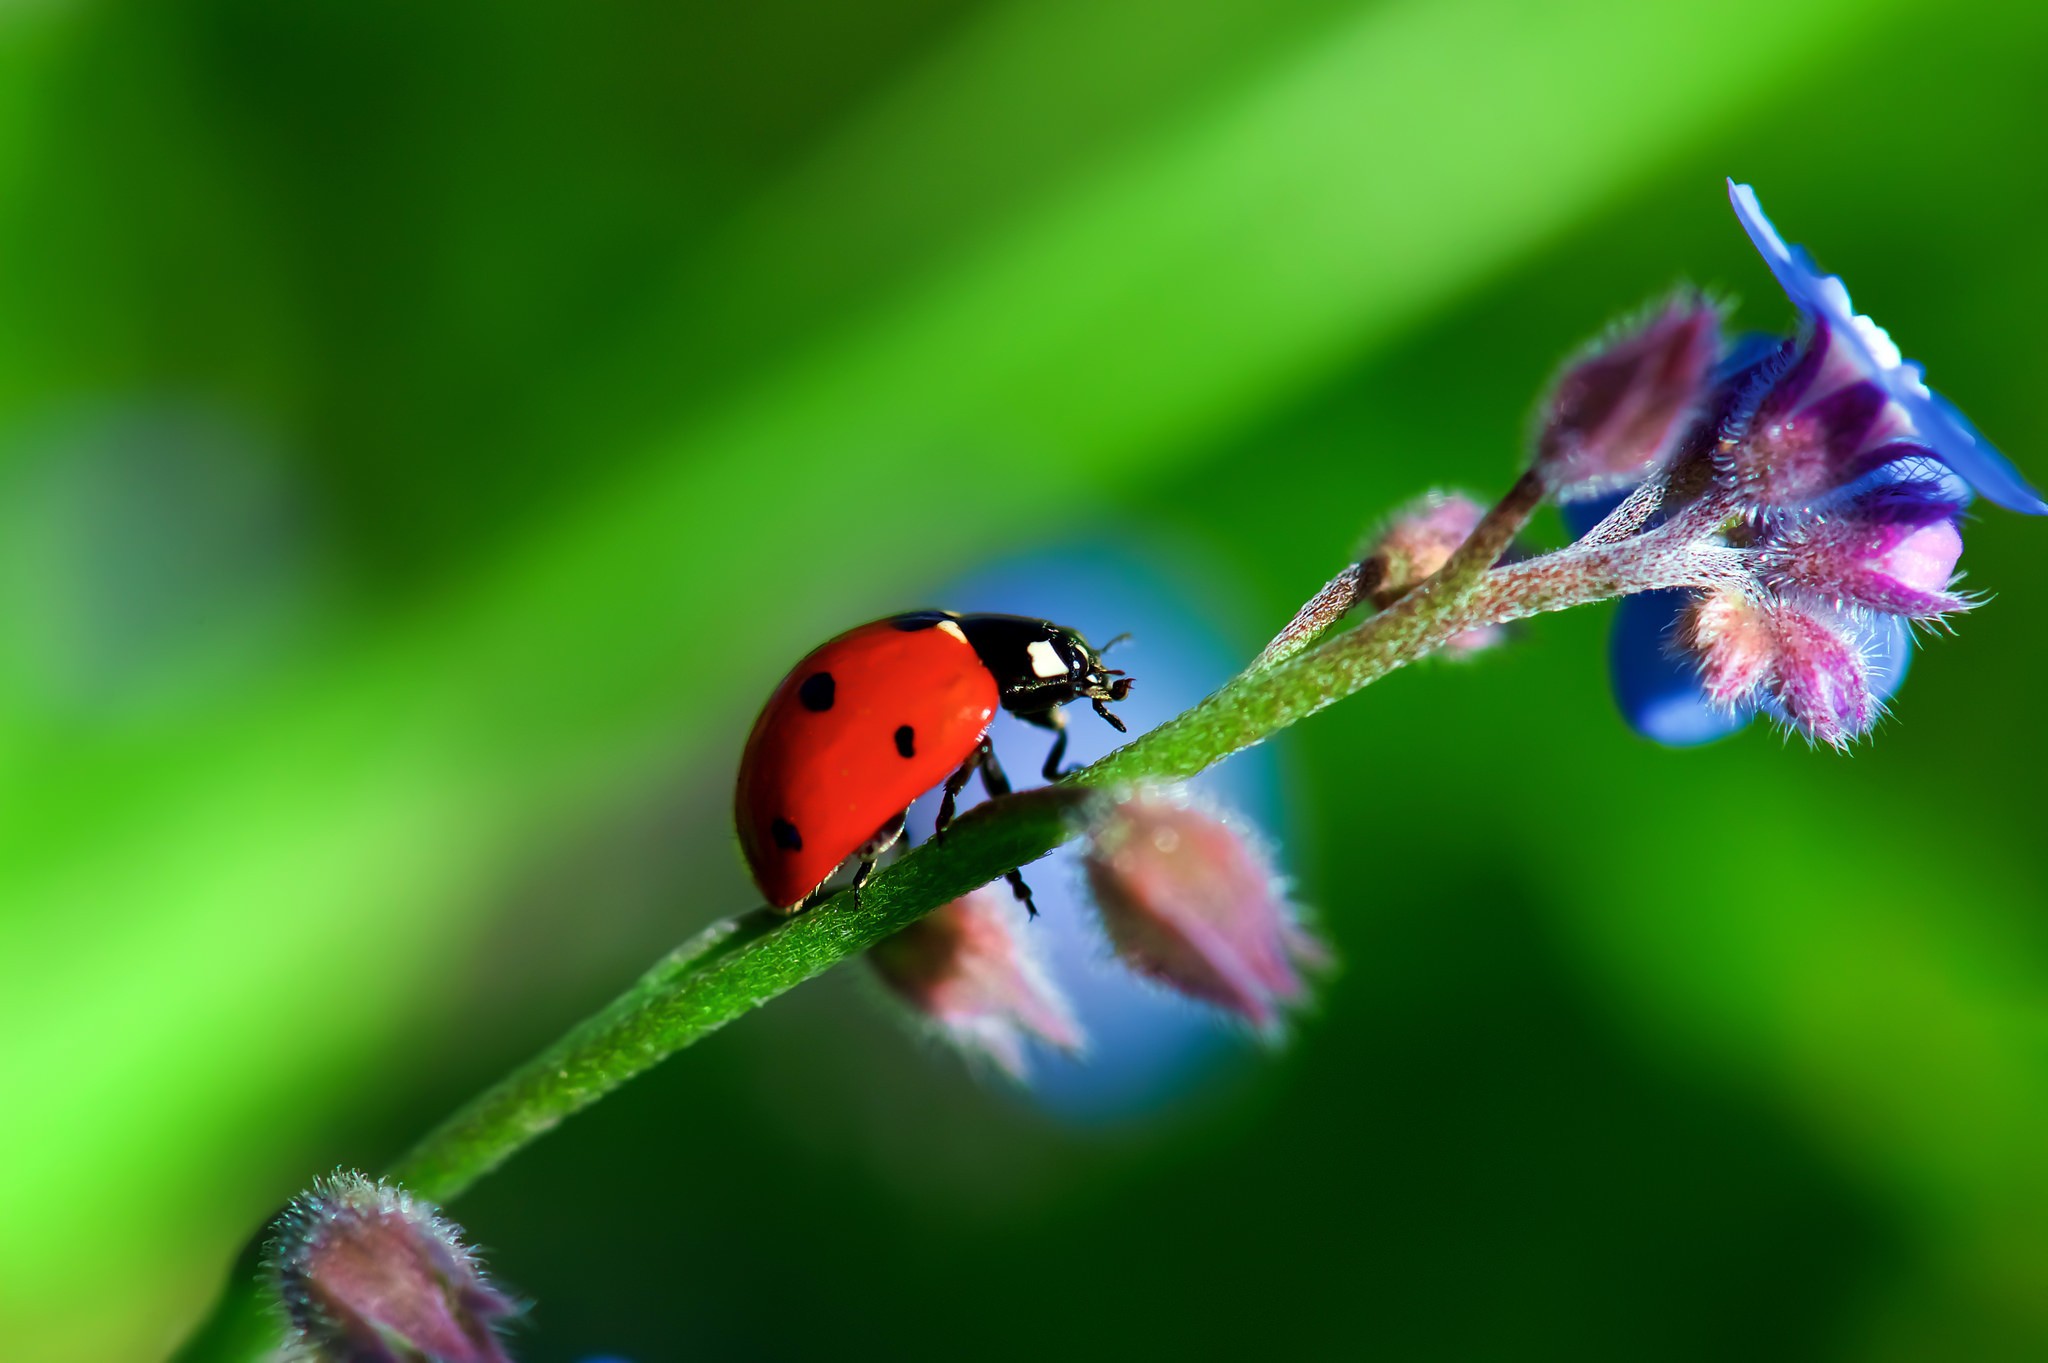 Free photo A ladybug crawls up the stem of a plant